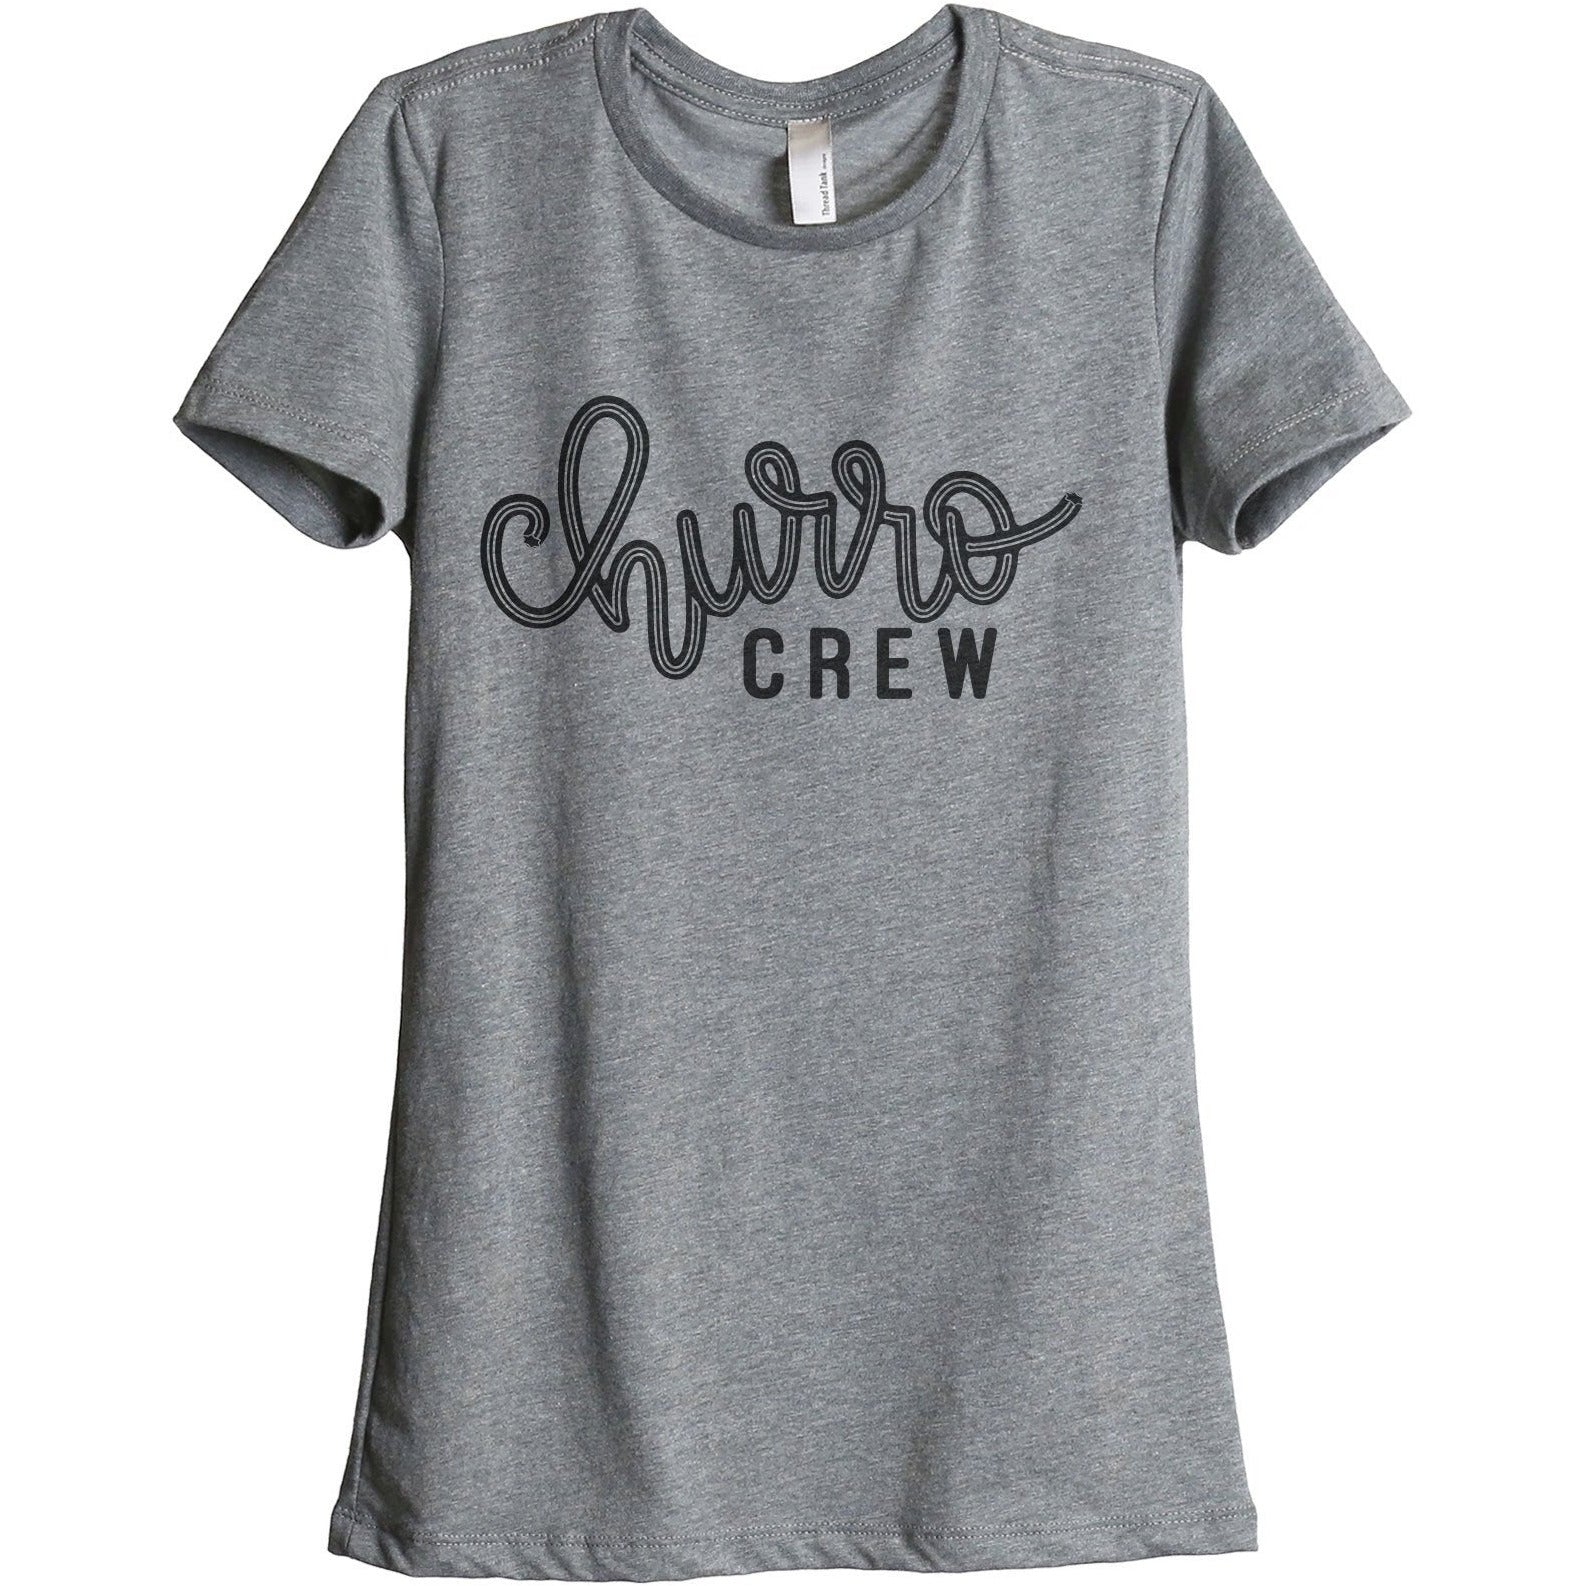 Churro Crew Women's Relaxed Crewneck T-Shirt Top Tee Heather Grey